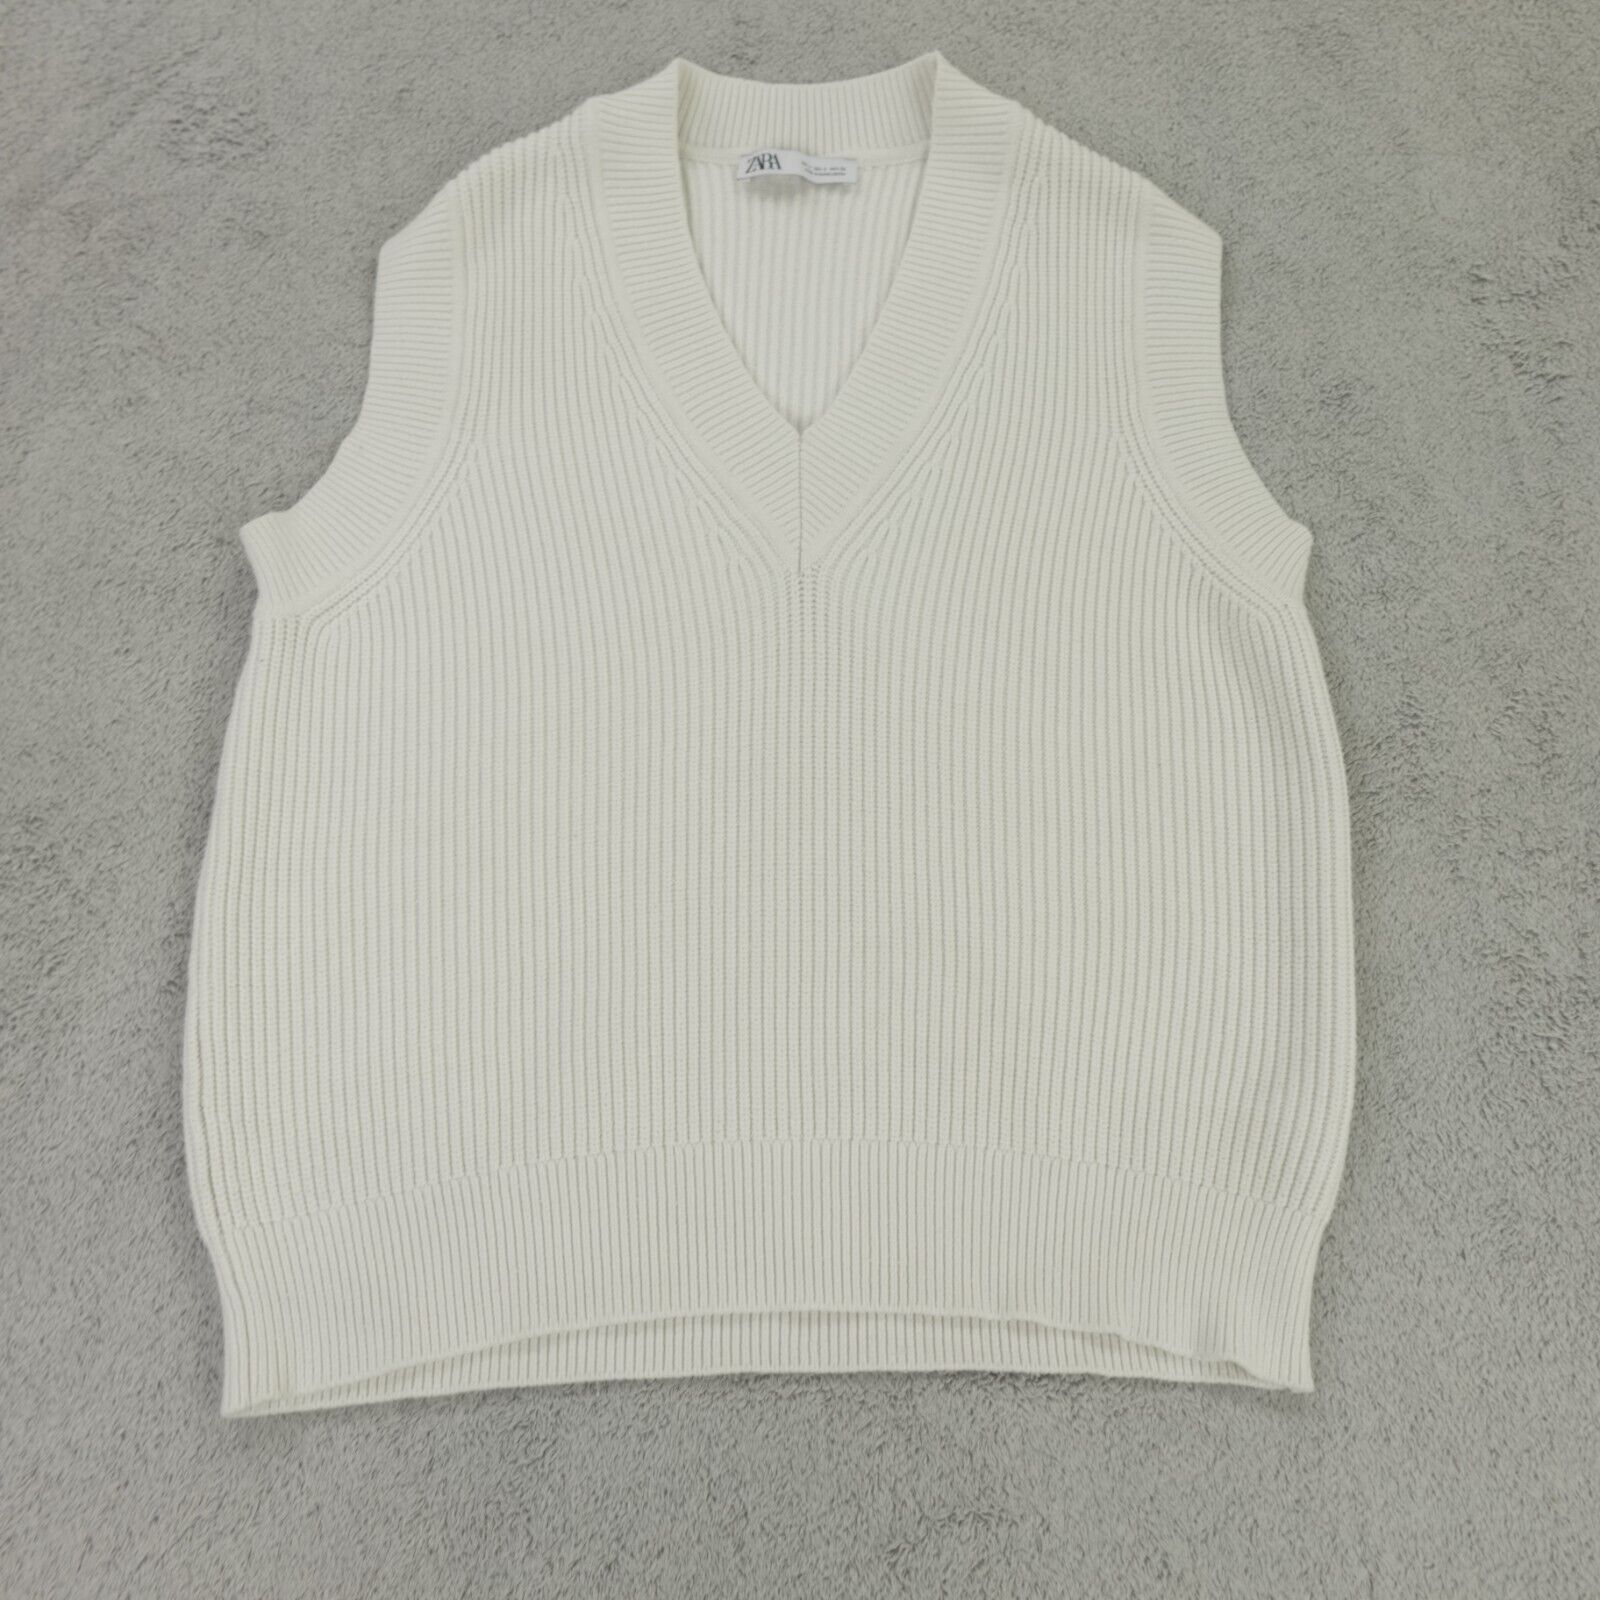 Zara Sweater Vest Womens Small White Ribbed Knit Oversize